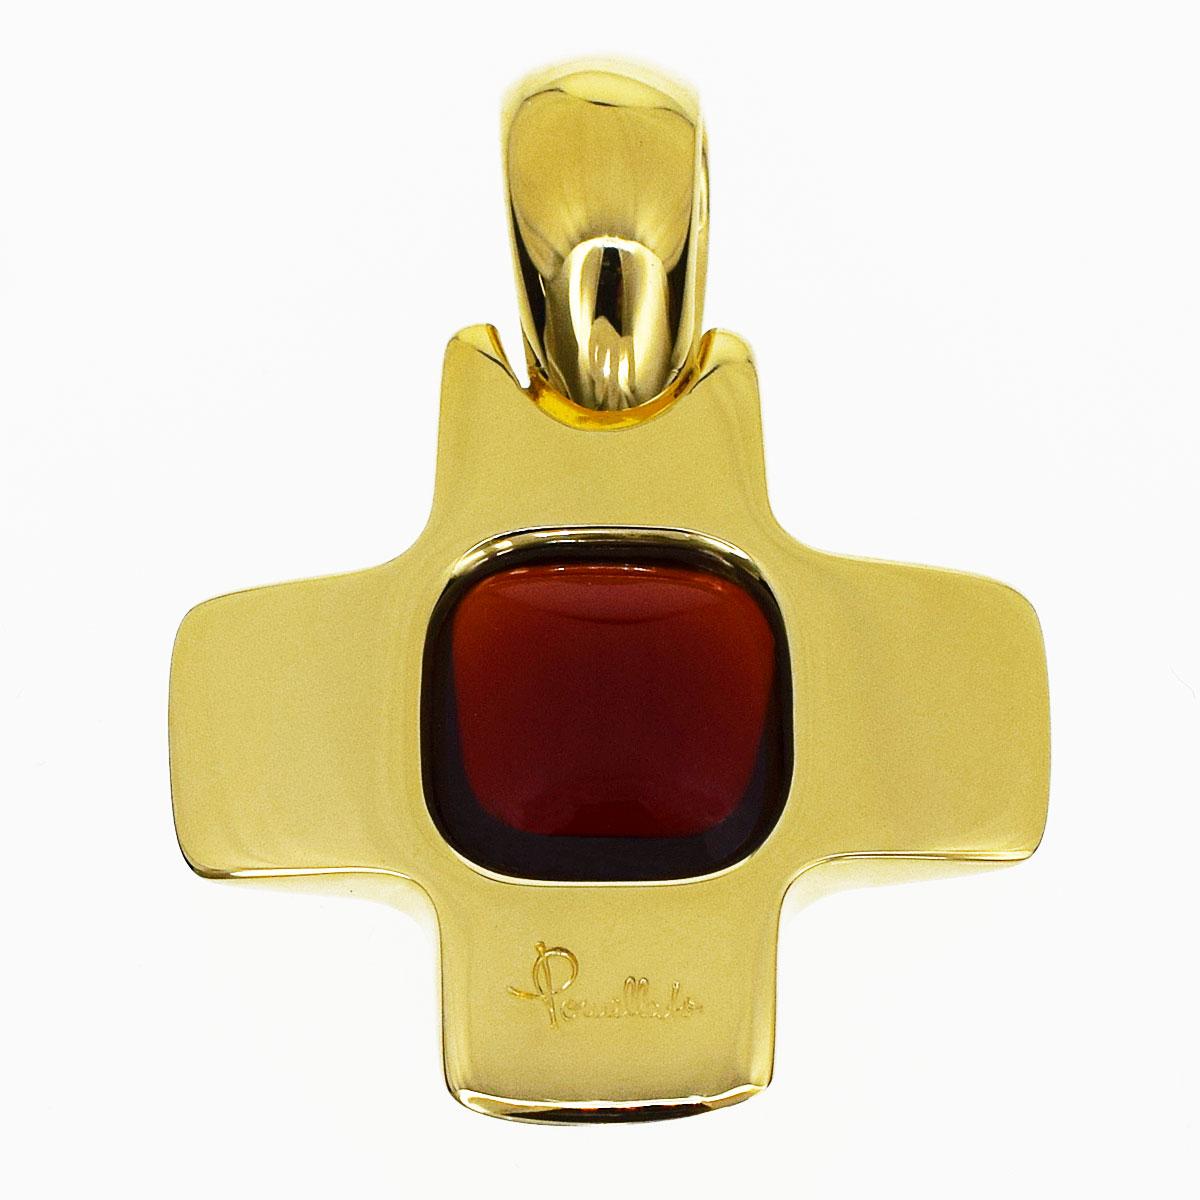 Brand:Pomellato
Name:Garnet gold cross pendant top
Material:1P garnet, 750 K18 YG Yellow Gold
Weight:9.7g（Approx)
Size:H31mm×W23.12mm / H1.22